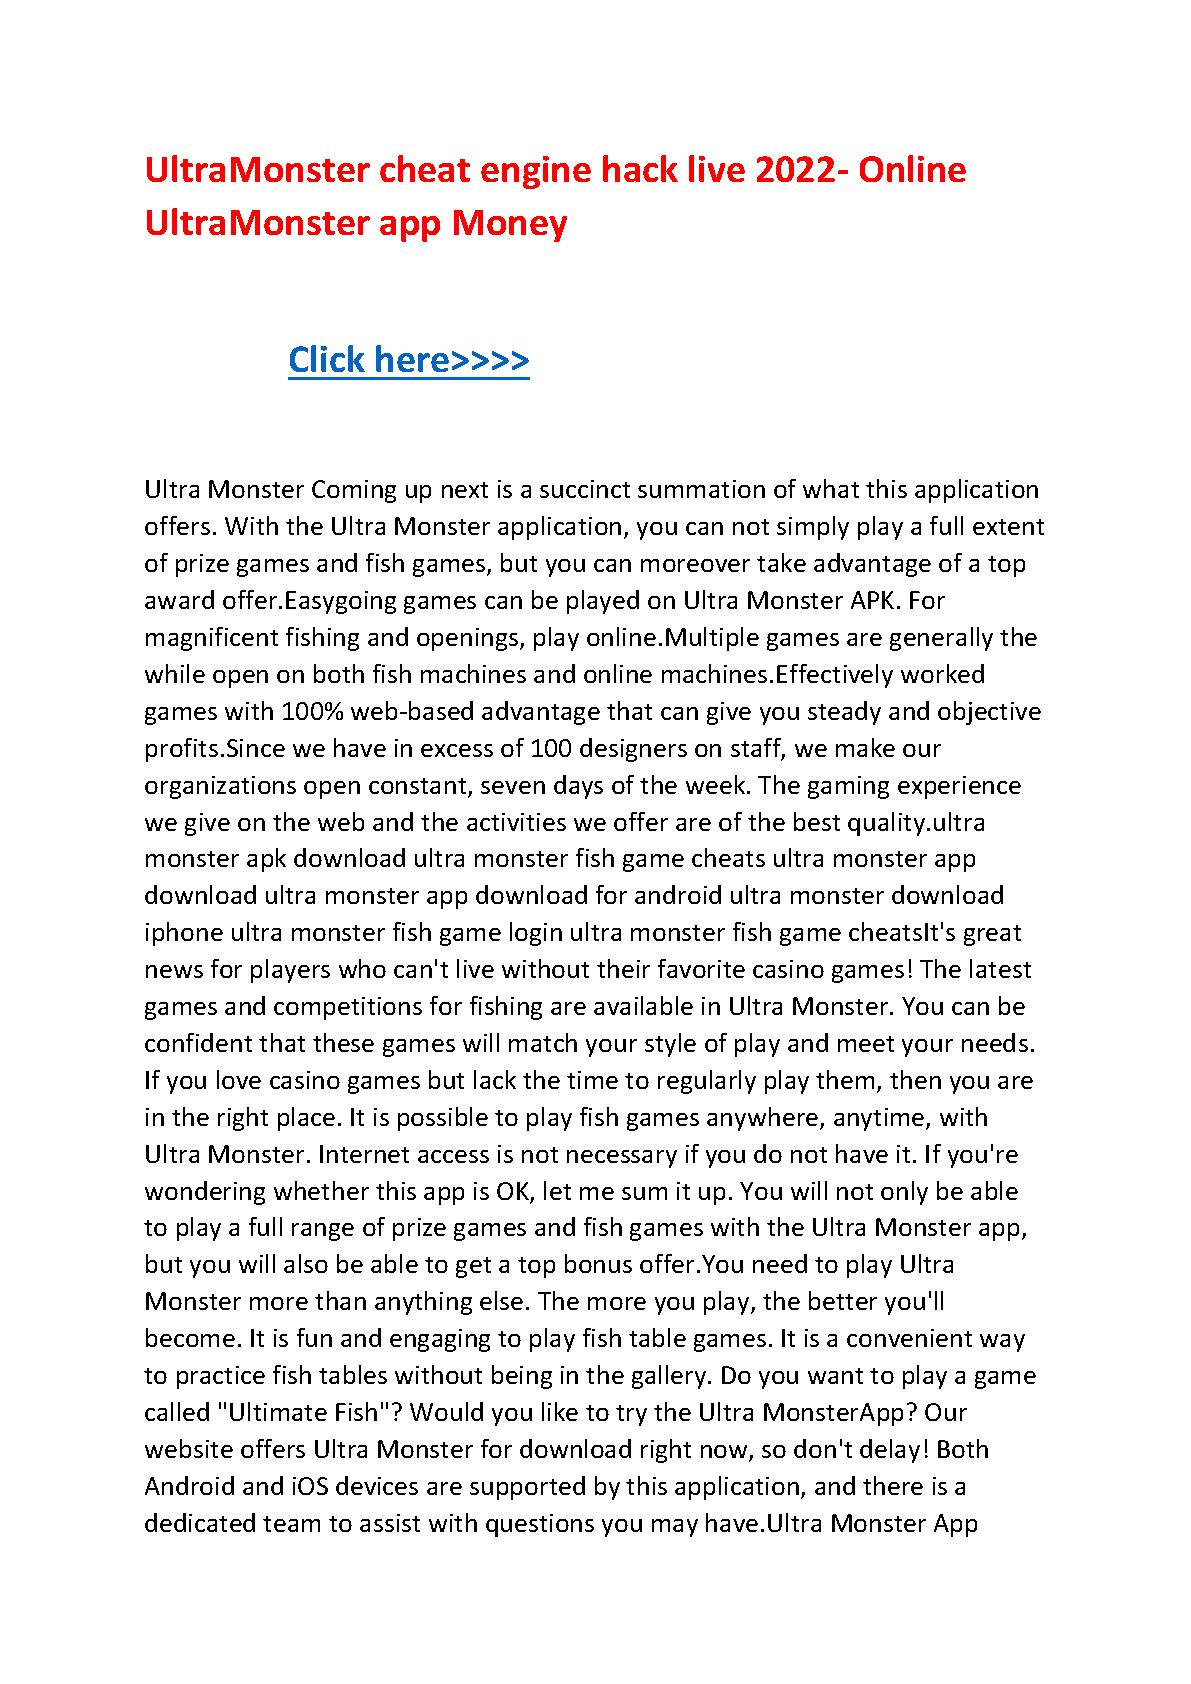 UltraMonster Cheat Engine Hack Live 2022 pdf PDF Host